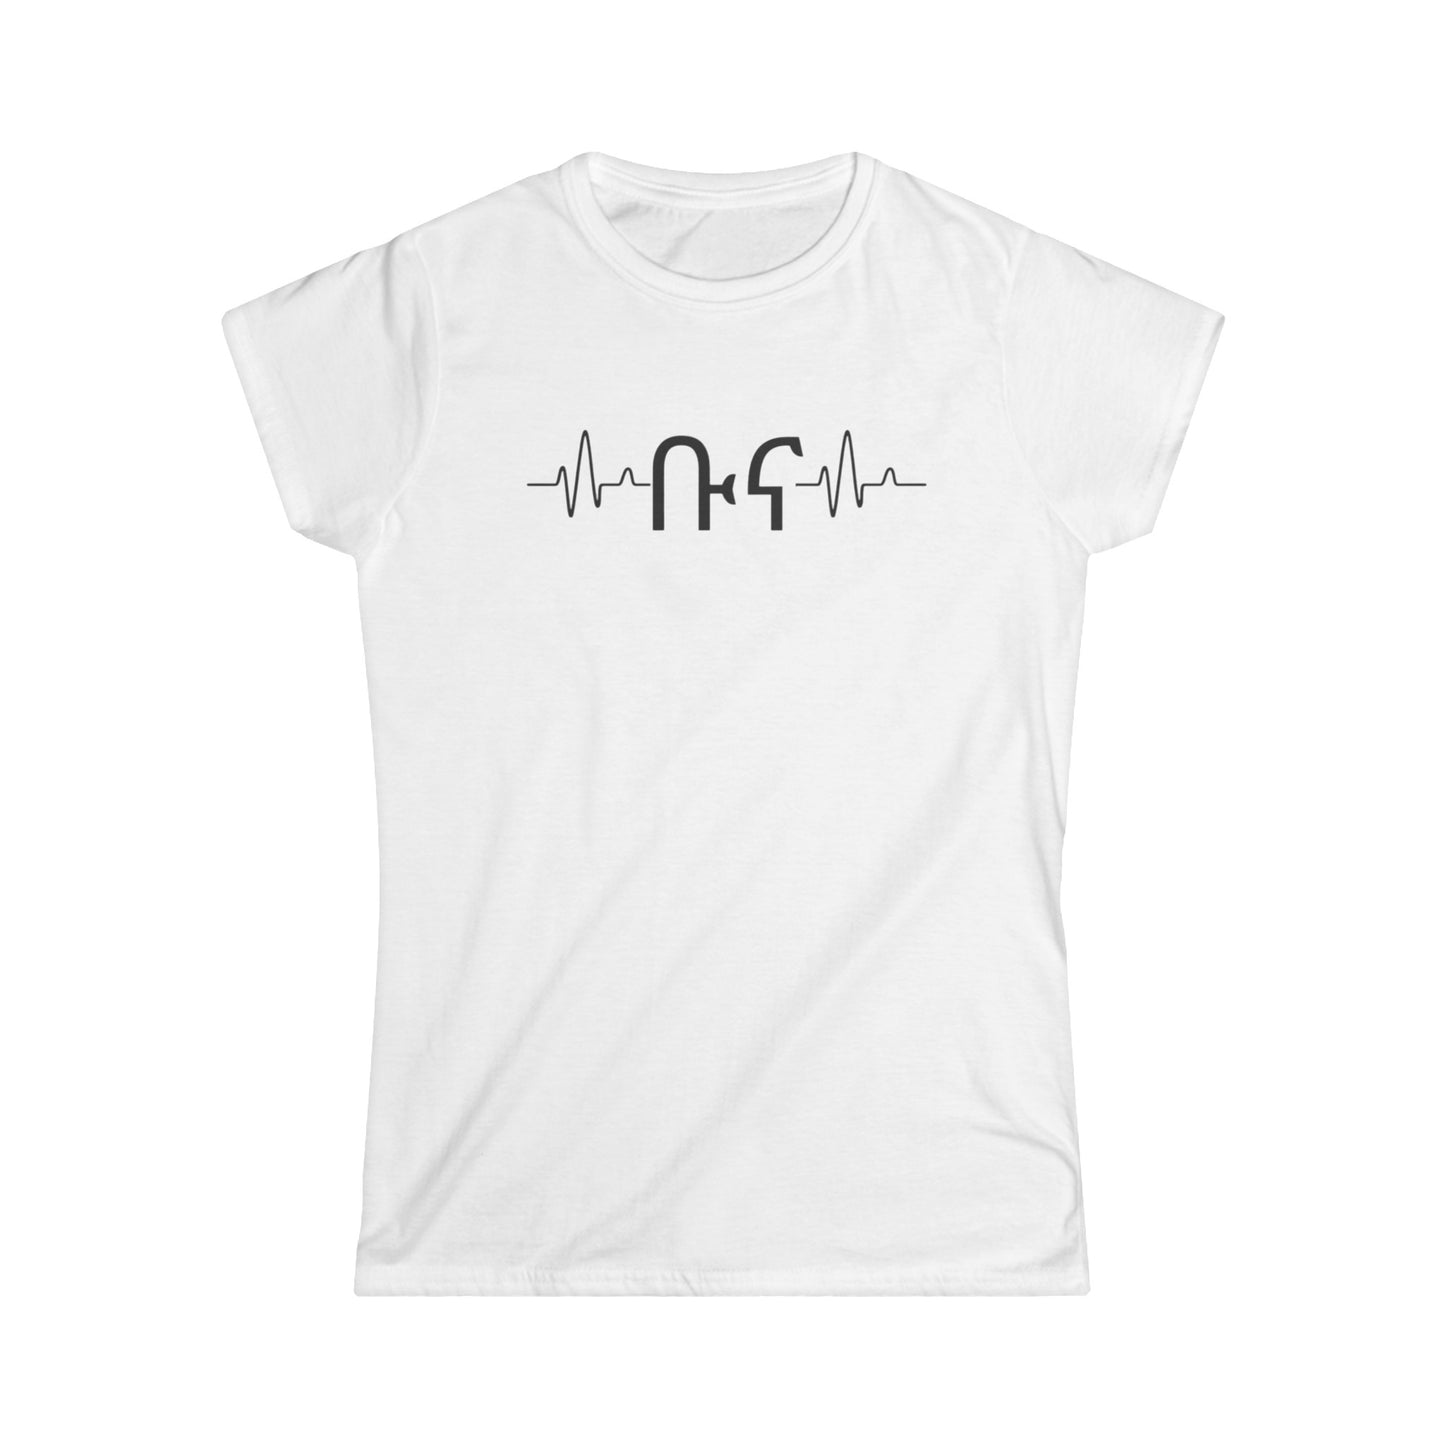 Women's Heartbeat Coffee t-shirt